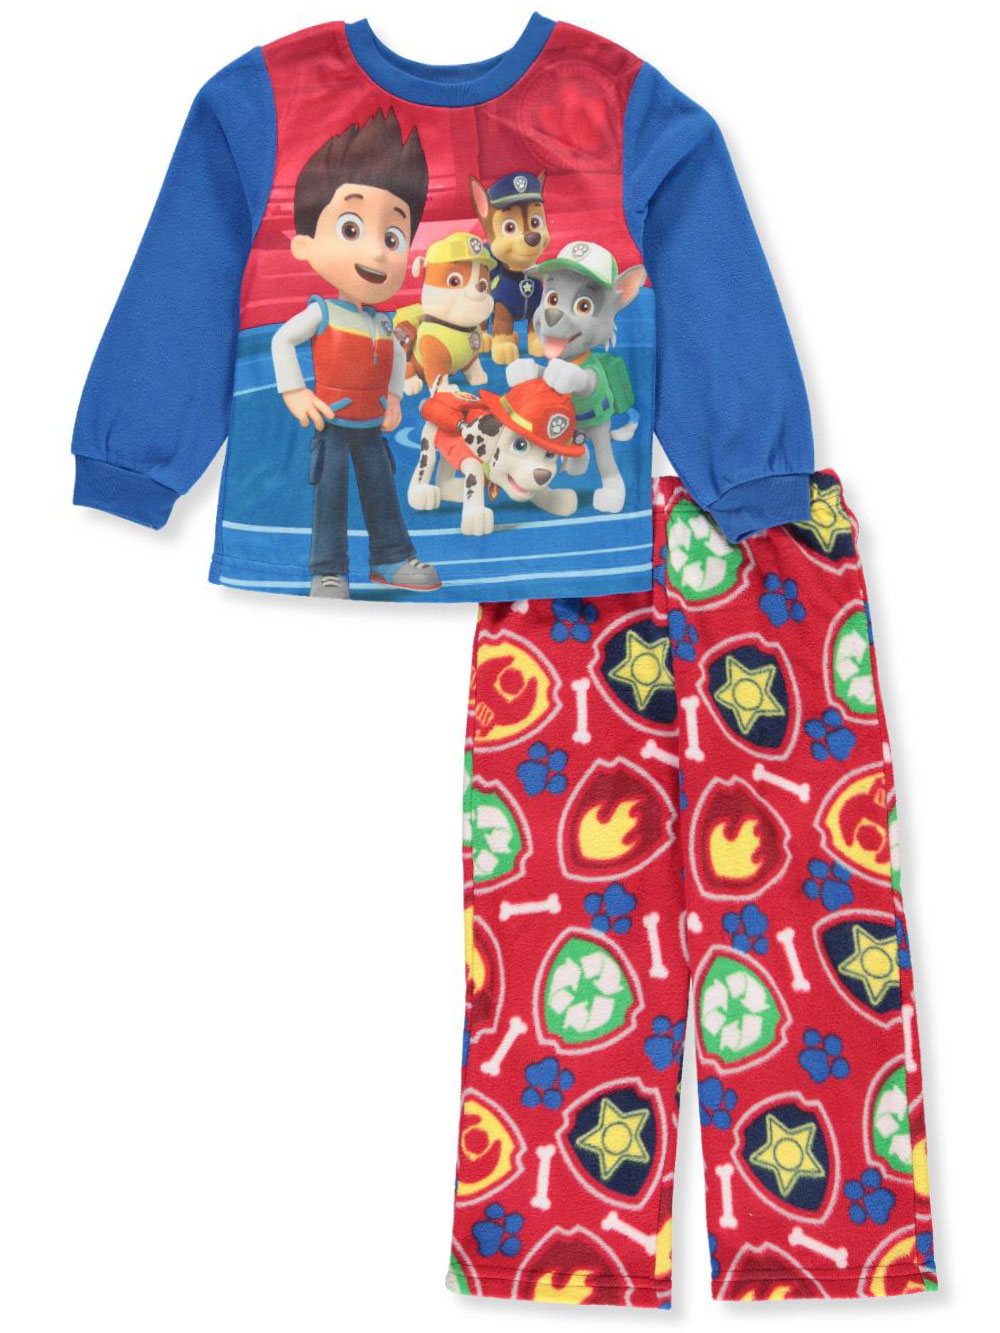 TDP Paw Patrol Boys Pyjamas Toddler Character Kids